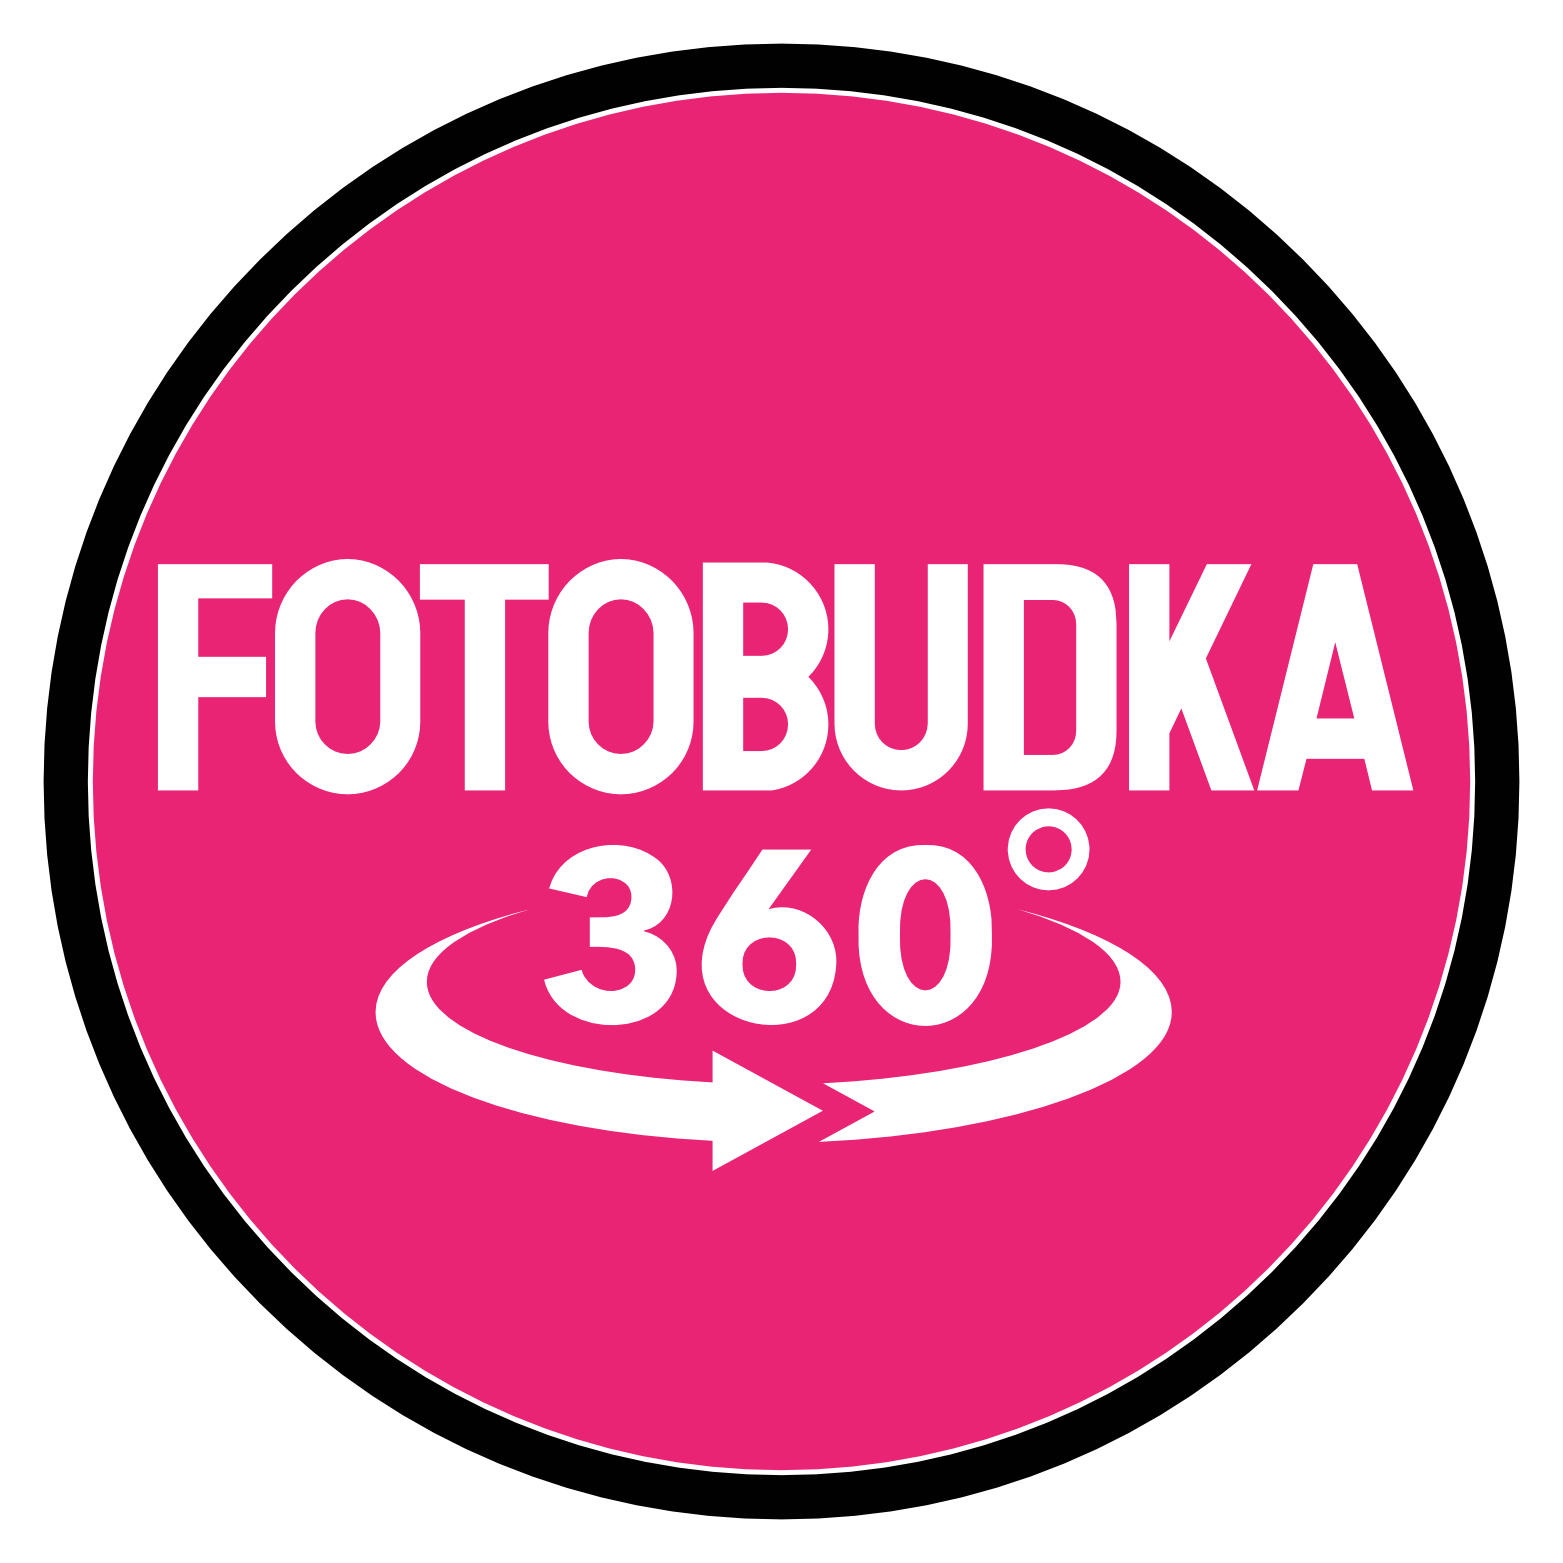 Fotobudka 360